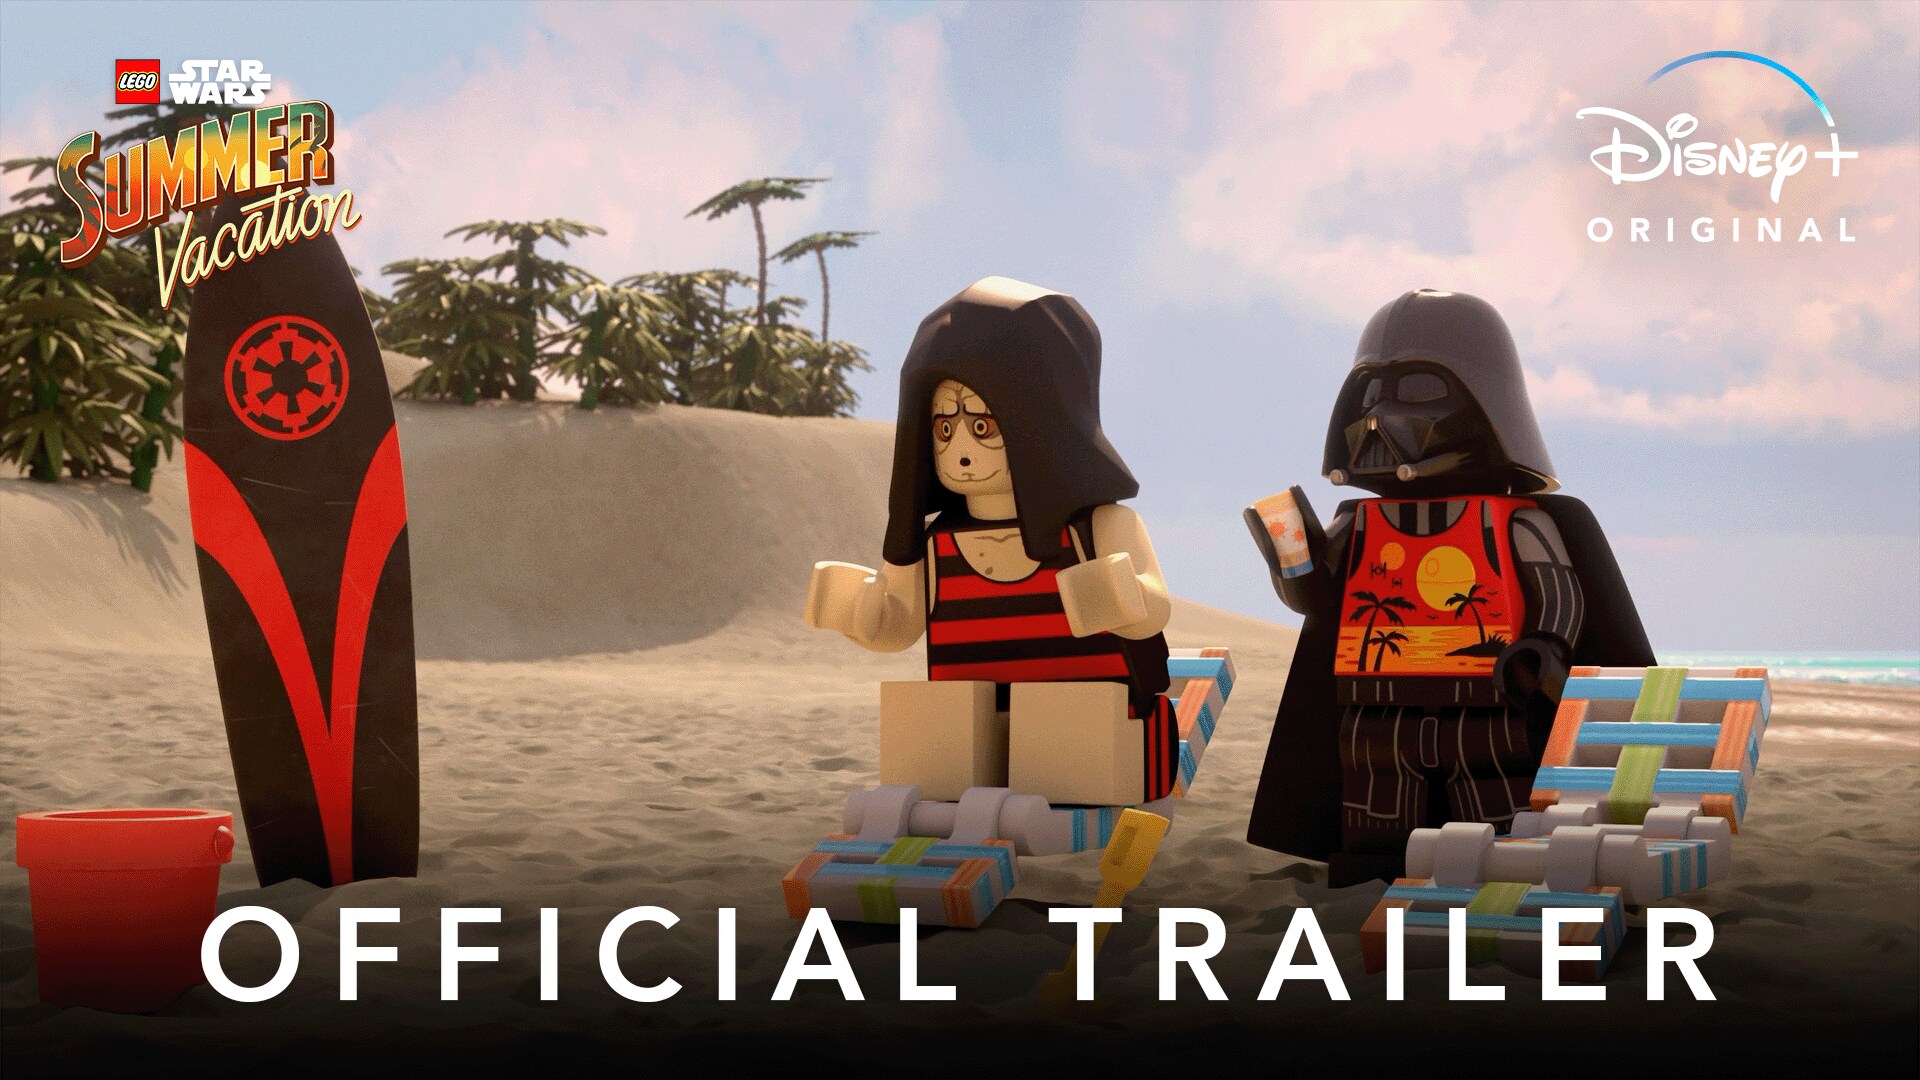 Official Trailer - LEGO Star Wars Summer Vacation